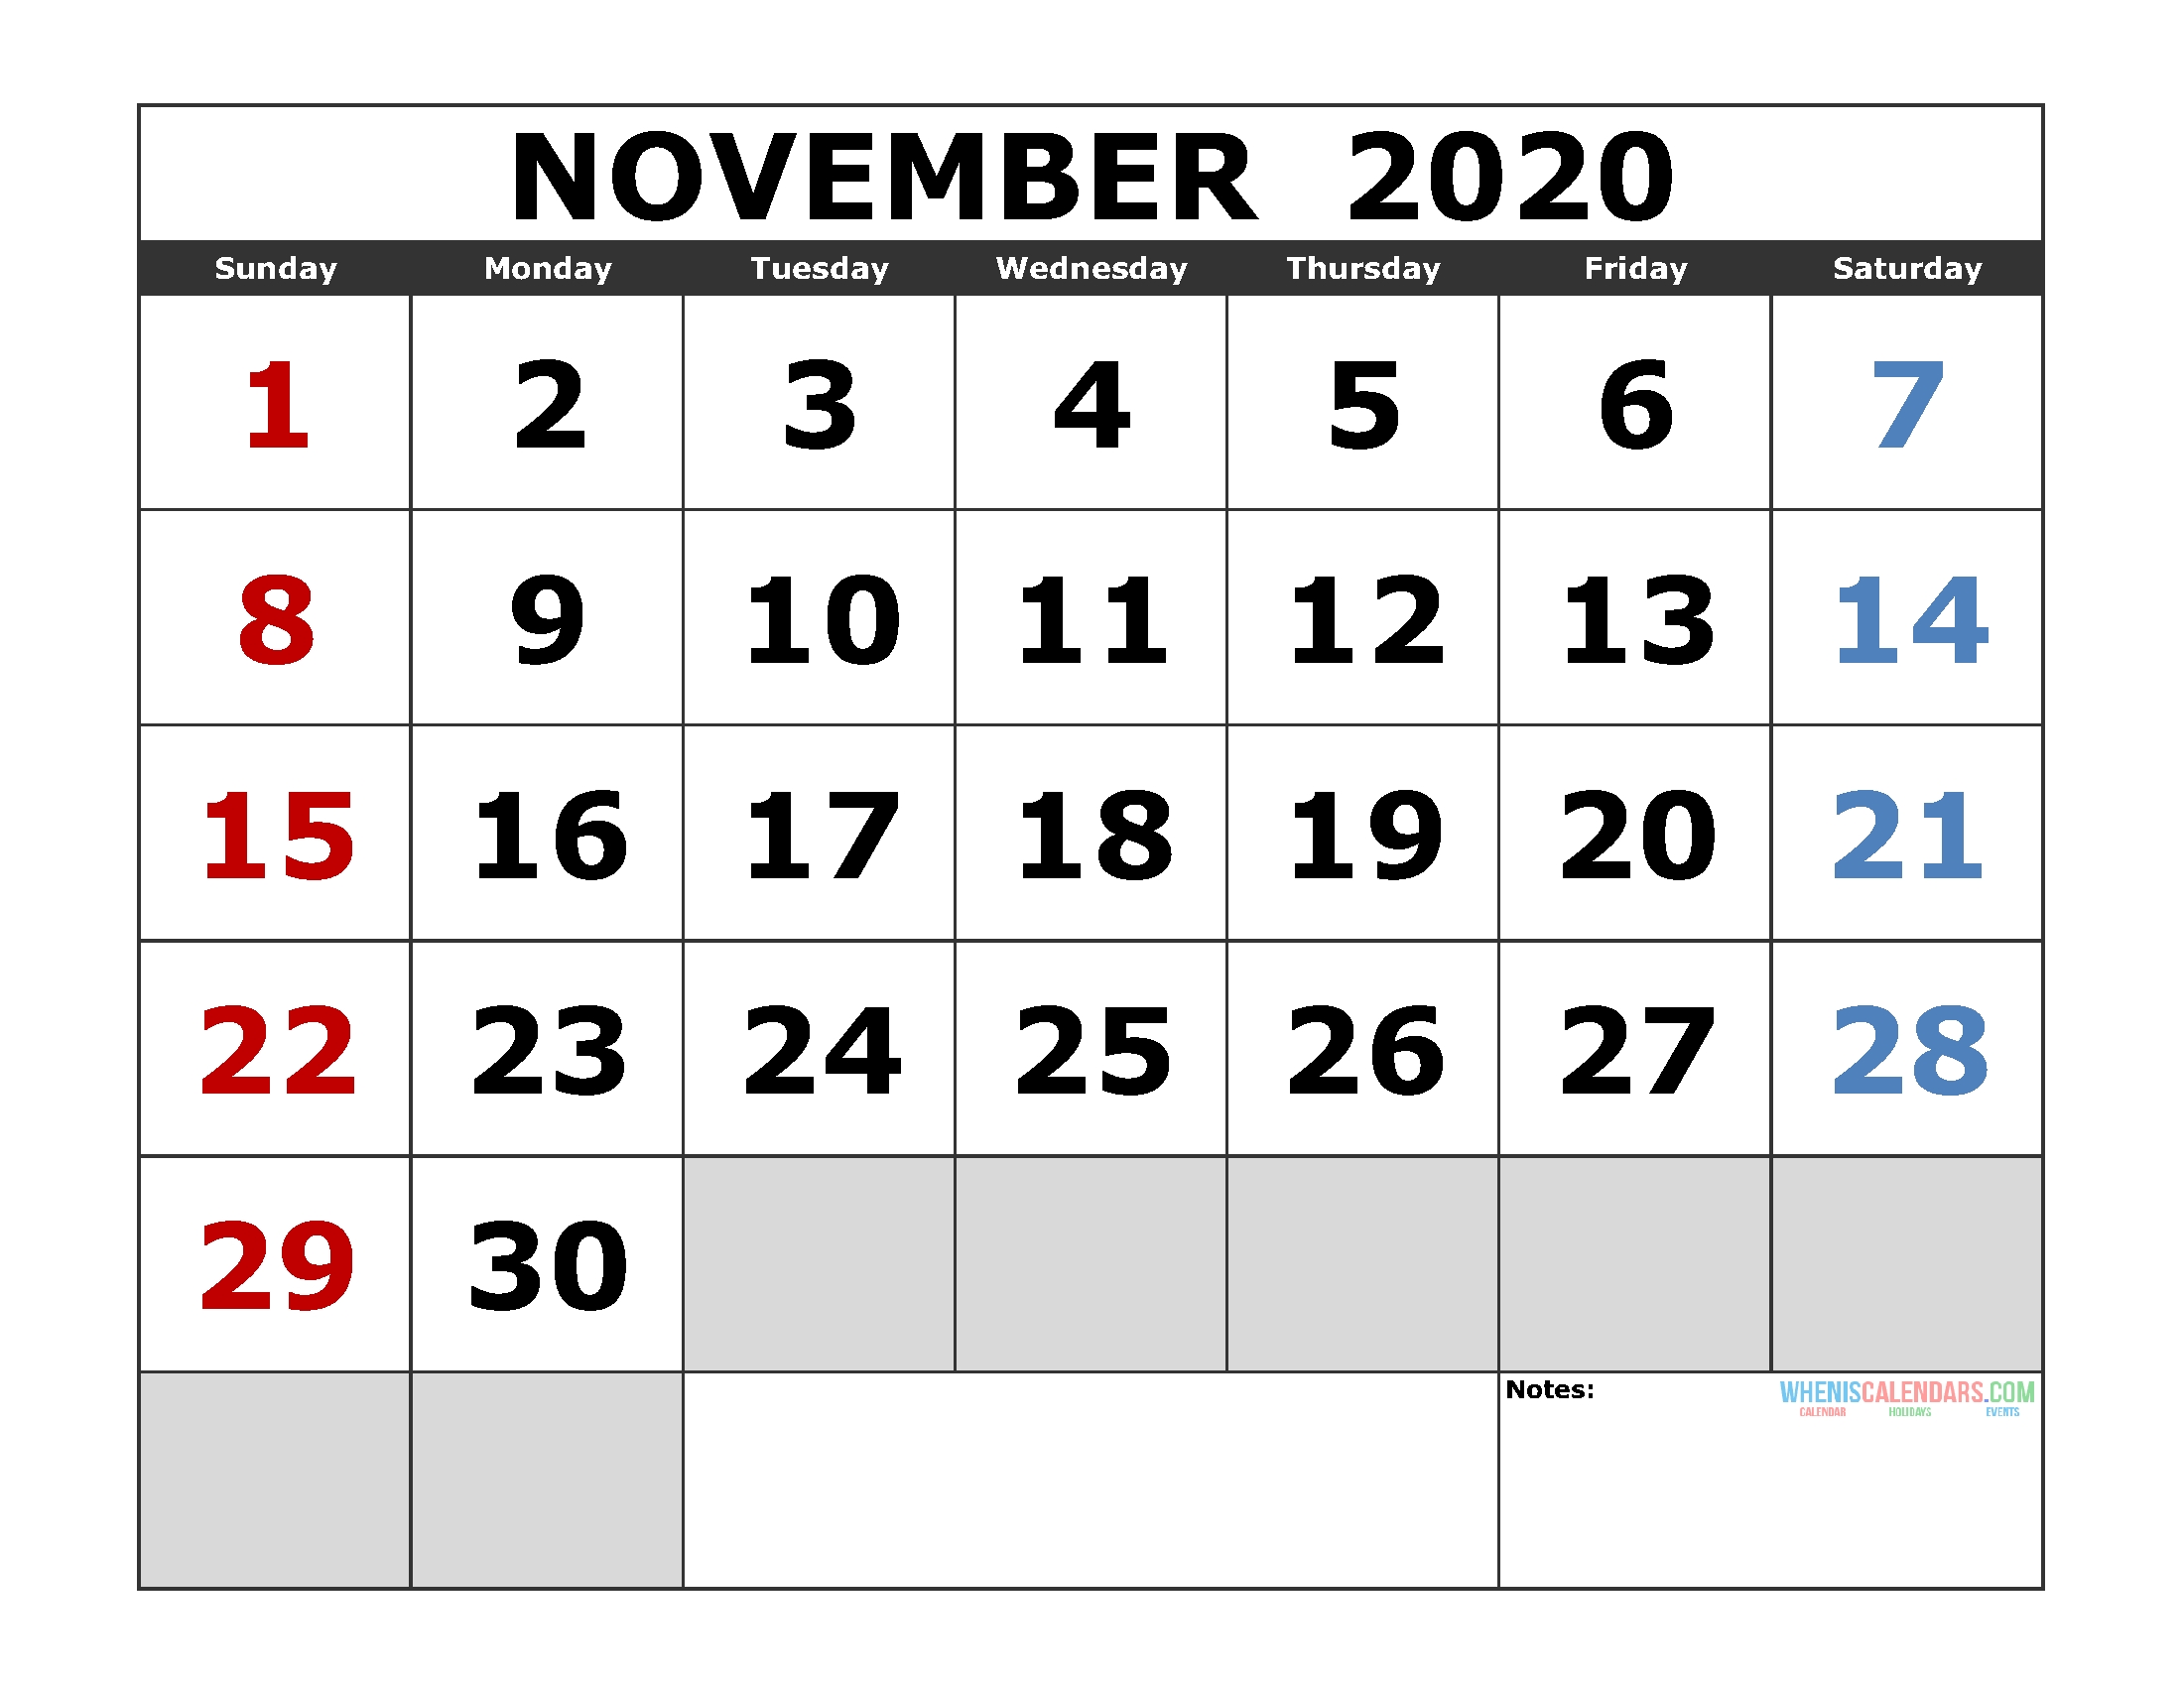 November 2020 Printable Calendar Template Excel, Pdf, Image-2020 Printable Calendar With Jewish Holidays